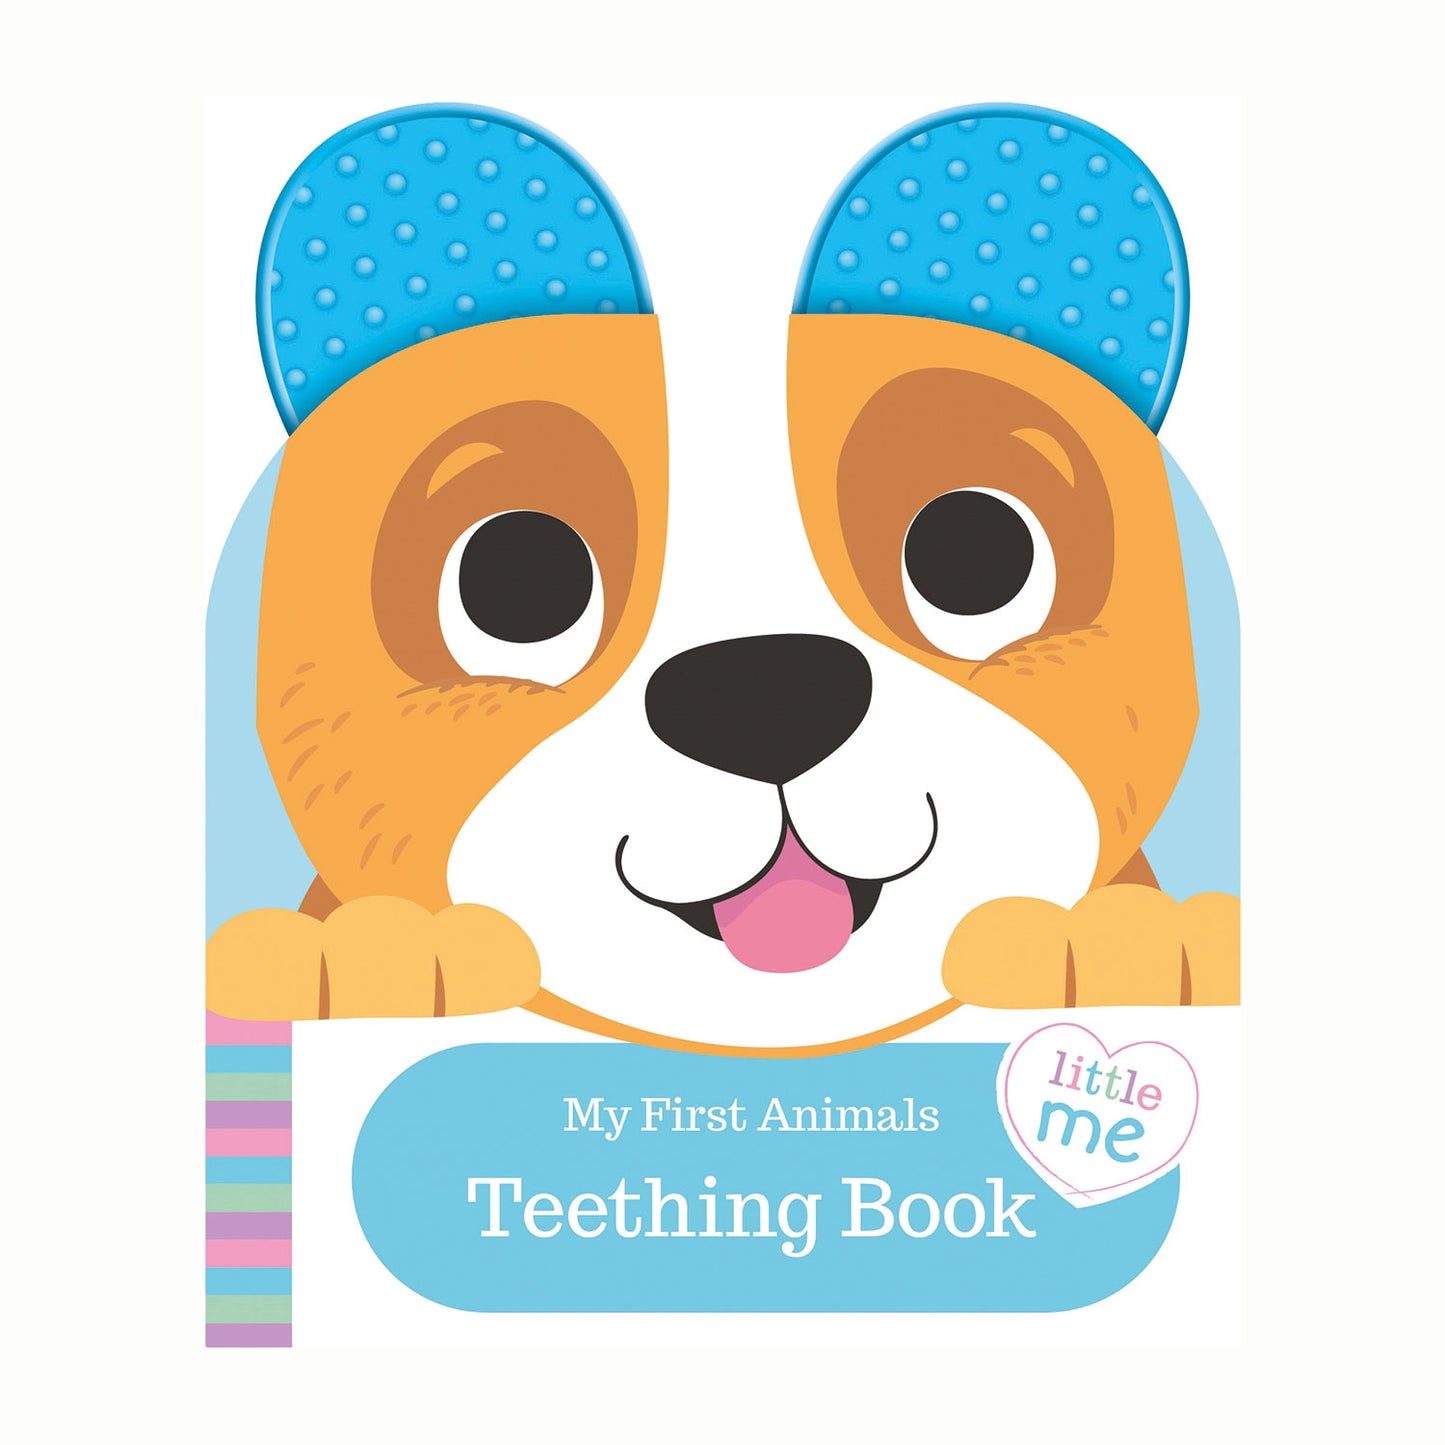 My First Animals Teething Book (Little Me) [Board book] Igloo Books